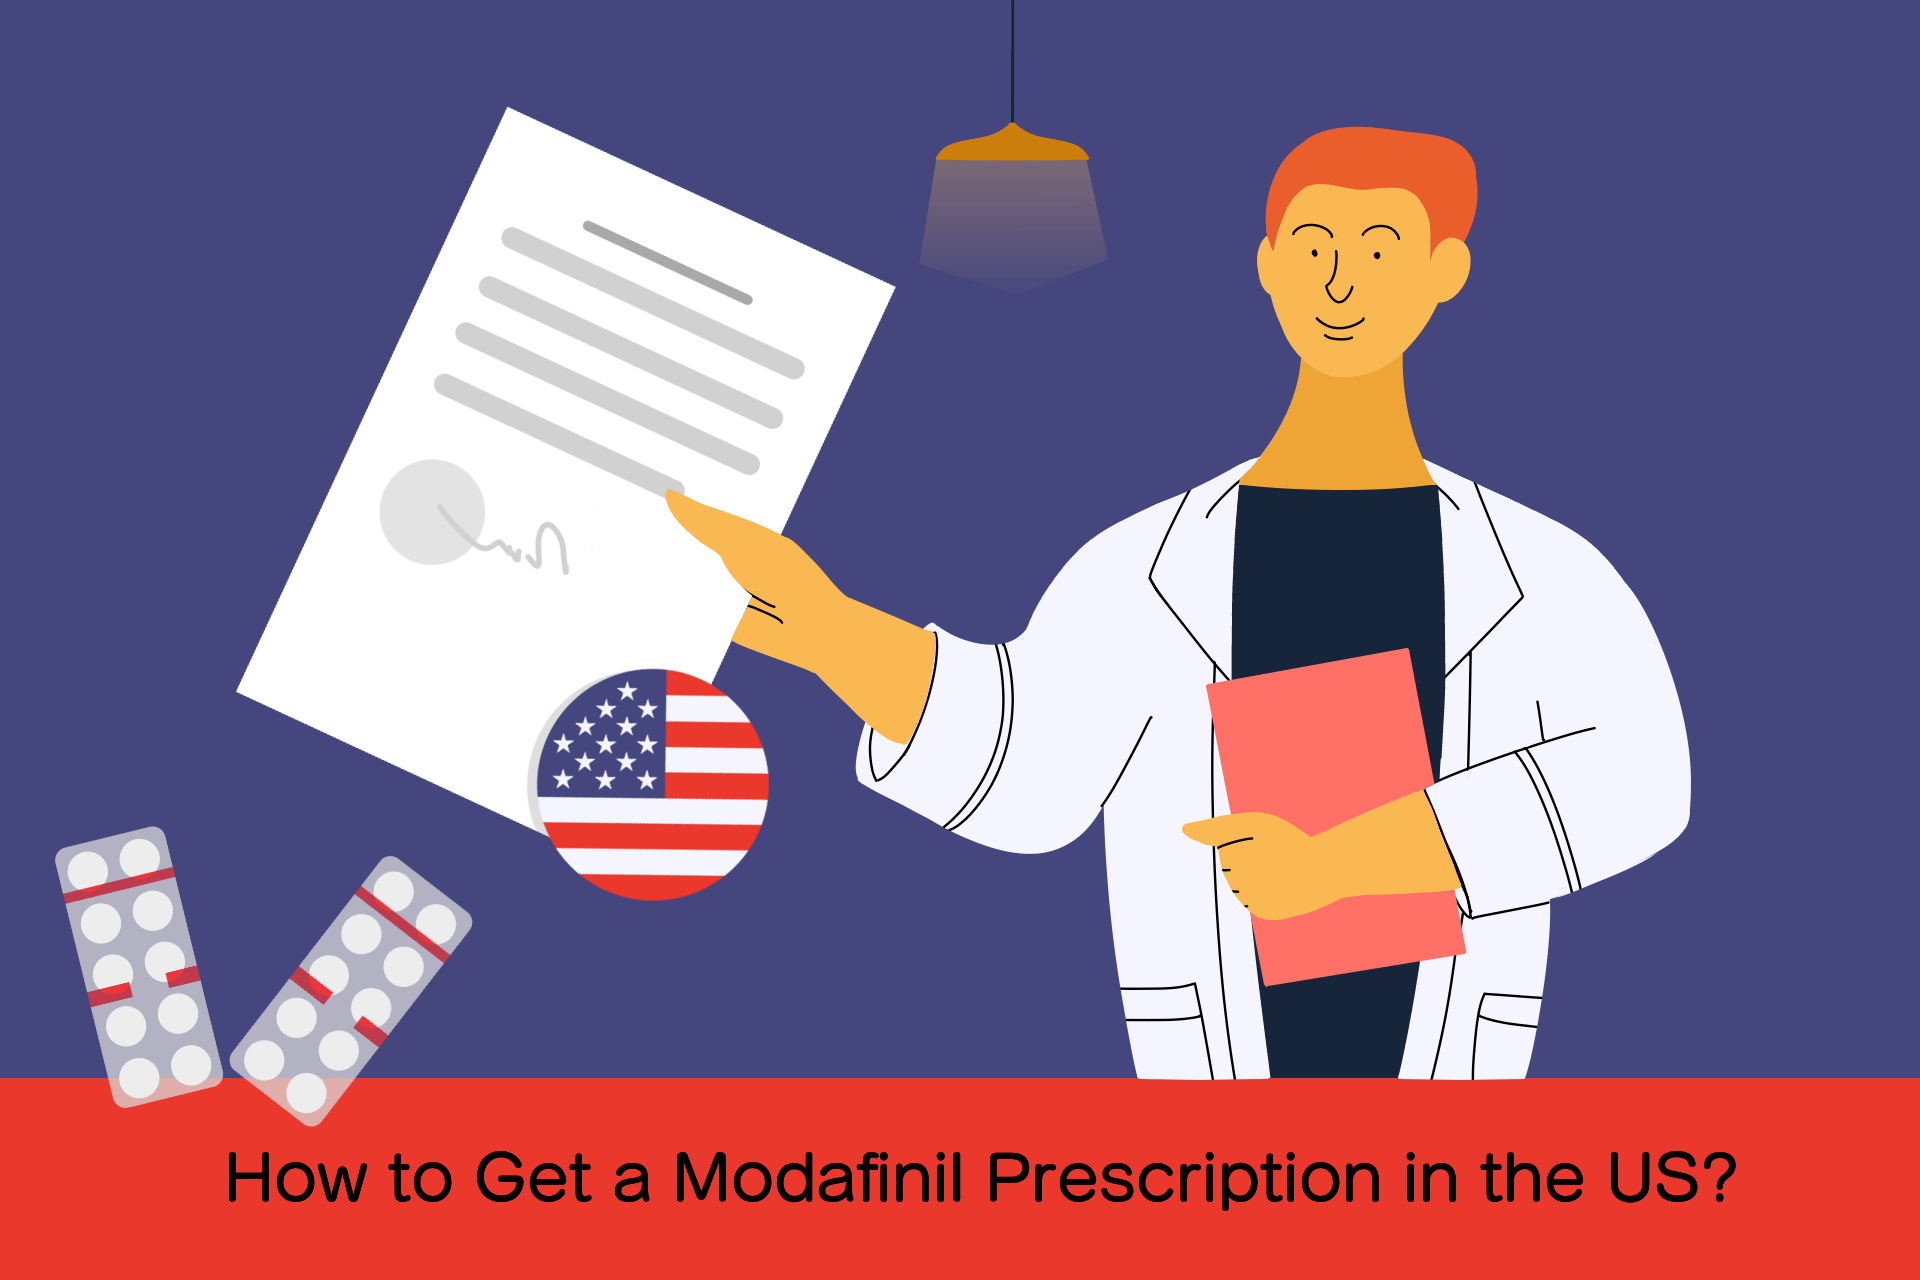 How to Get a Modafinil Prescription in the US?